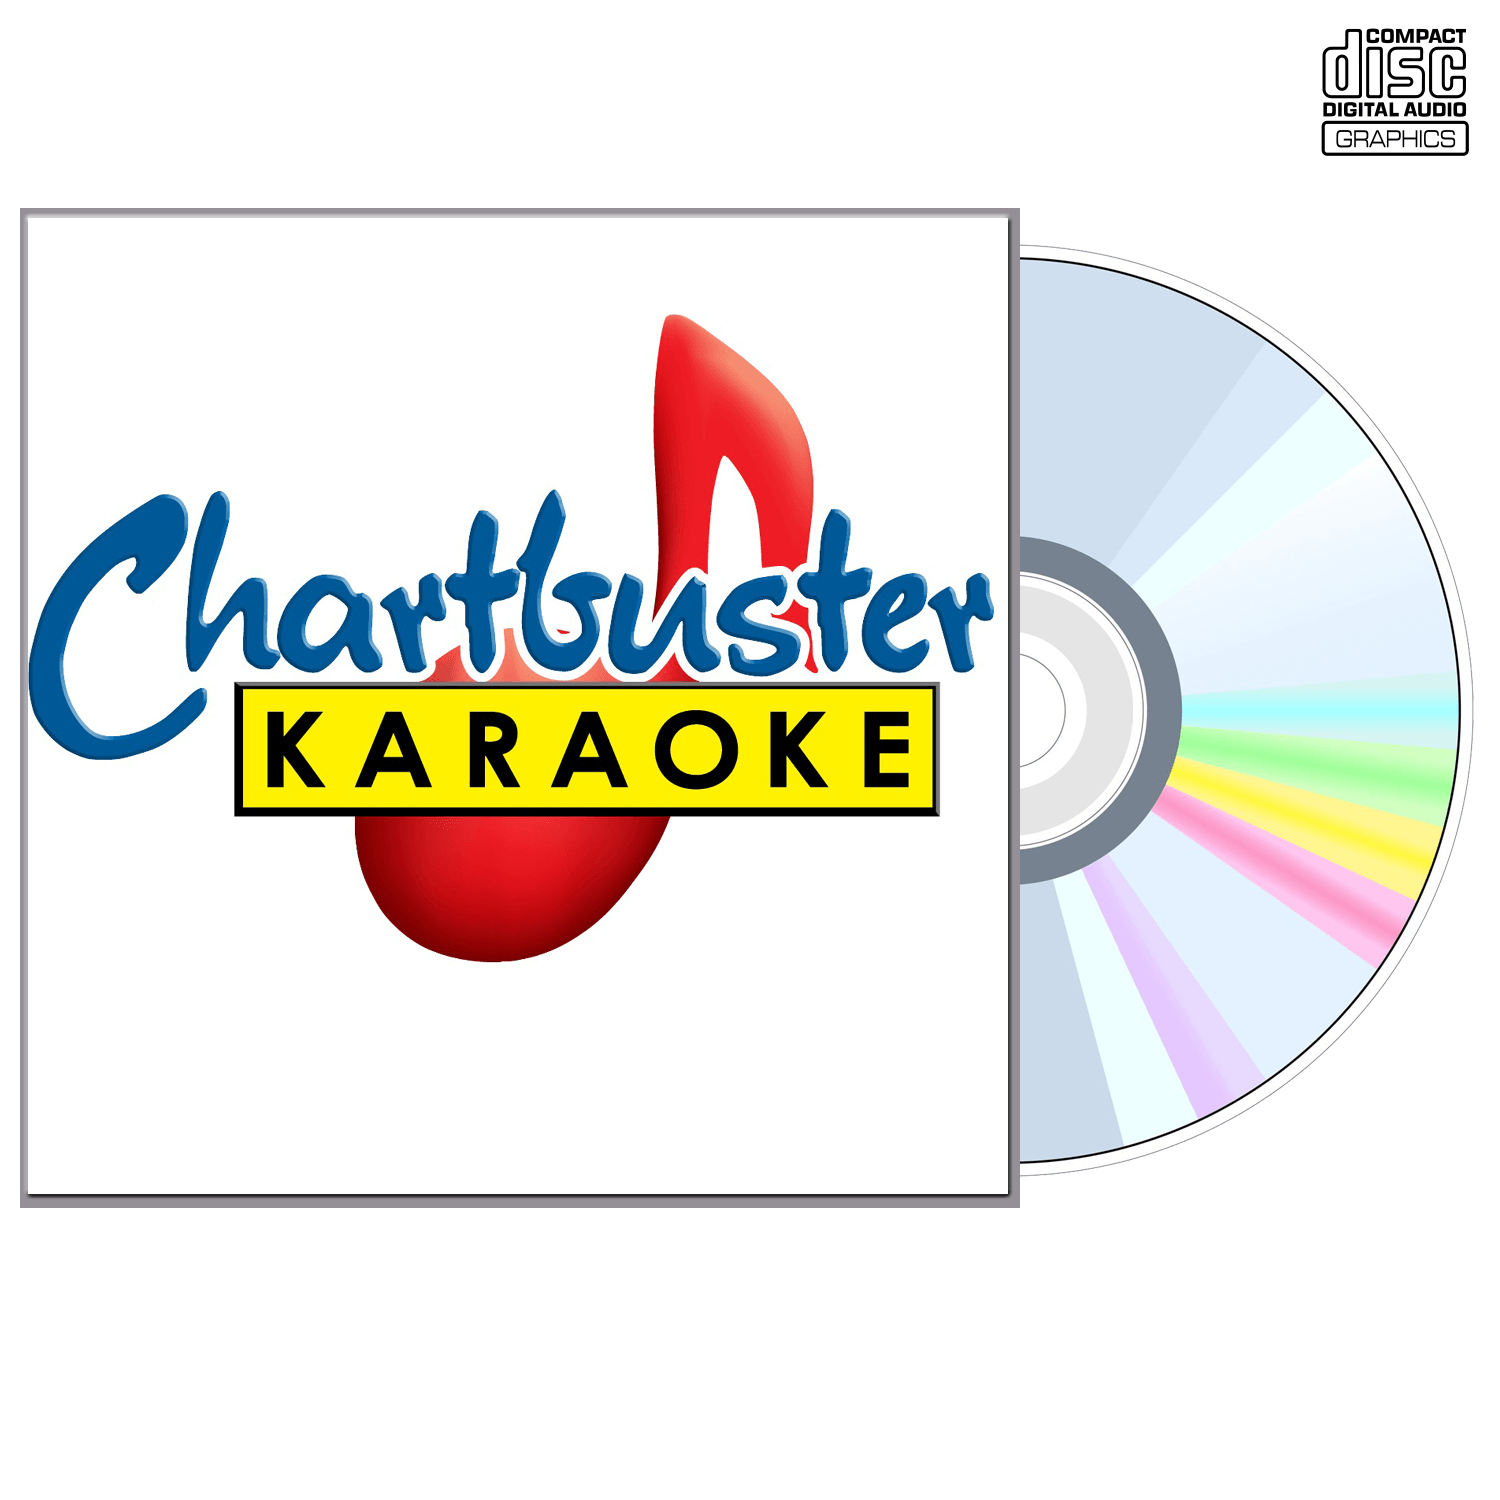 Trick Pony - CD+G - Chartbuster Karaoke - Karaoke Home Entertainment